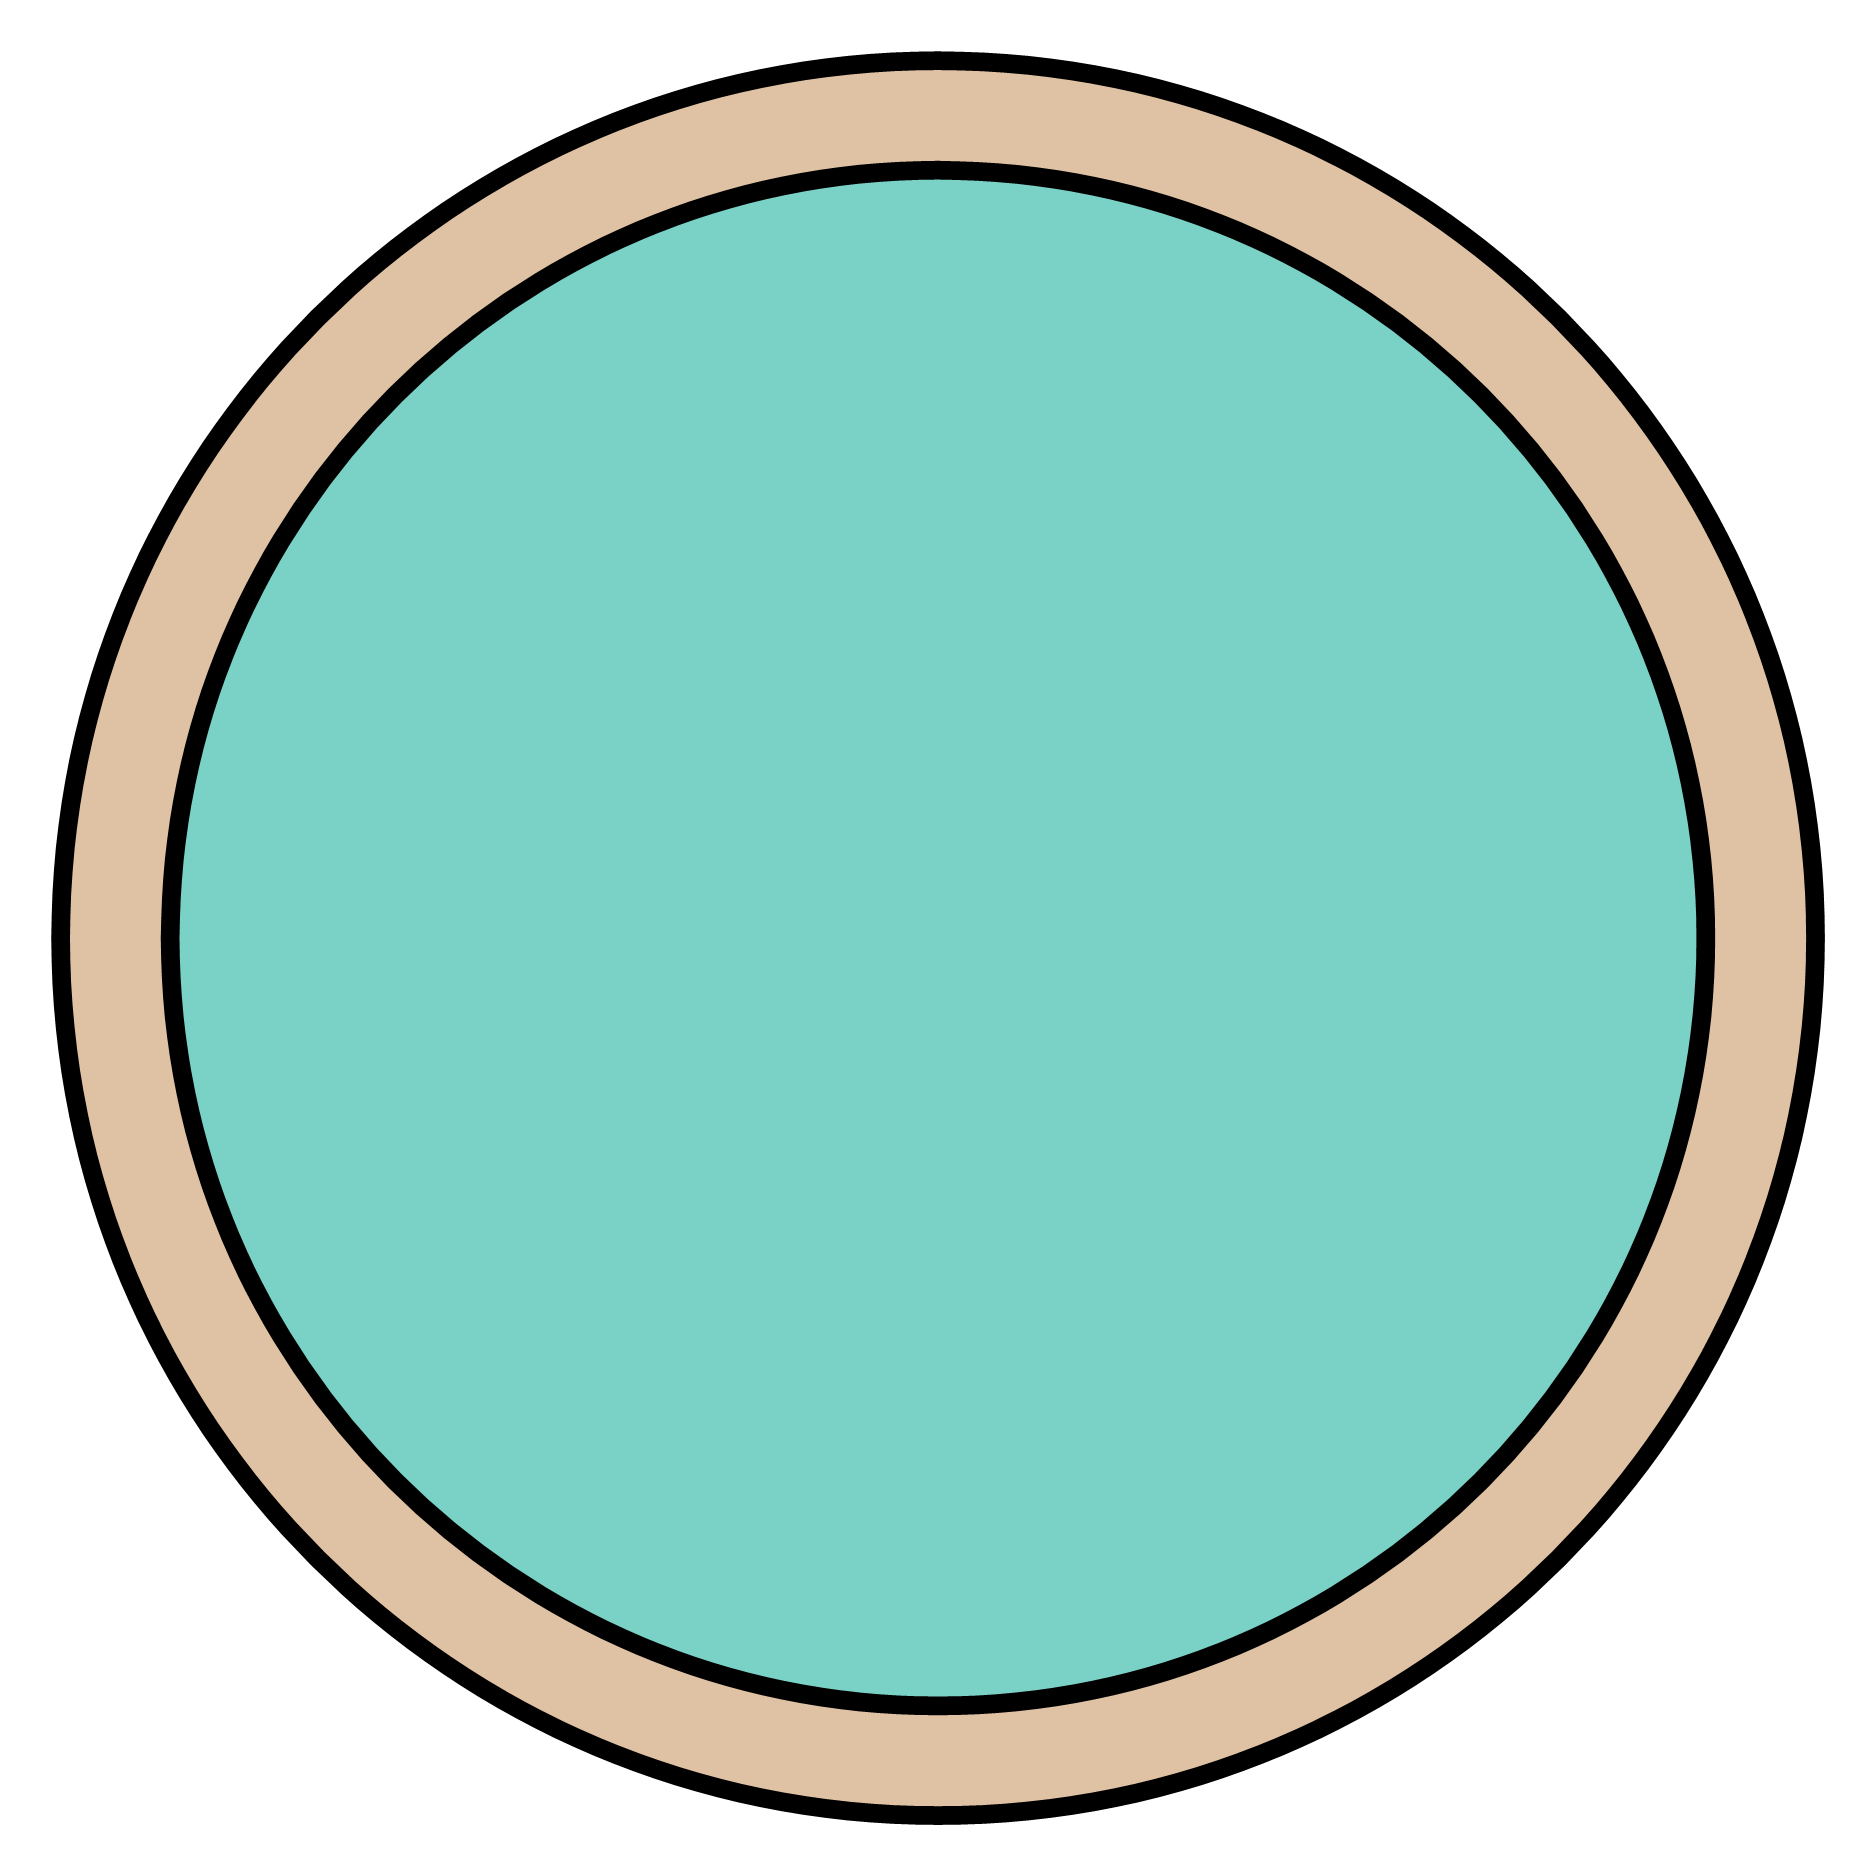 Na slici je bazen kružnog oblika sa stazom oko njega. Staza je oblika kružnog vijenca.